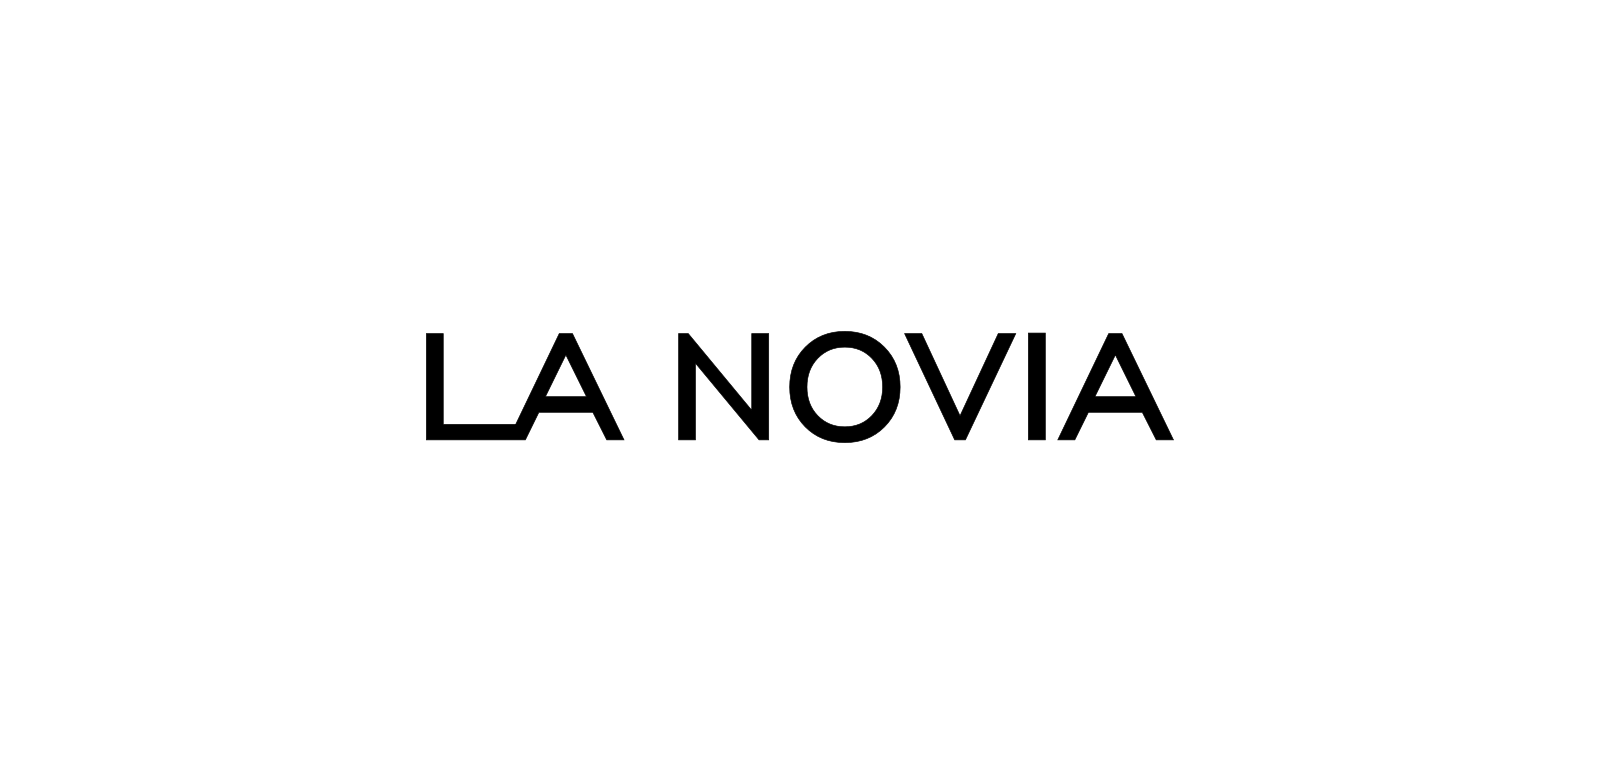 LA NOVIA - свадебный салон Premium класса в Риге